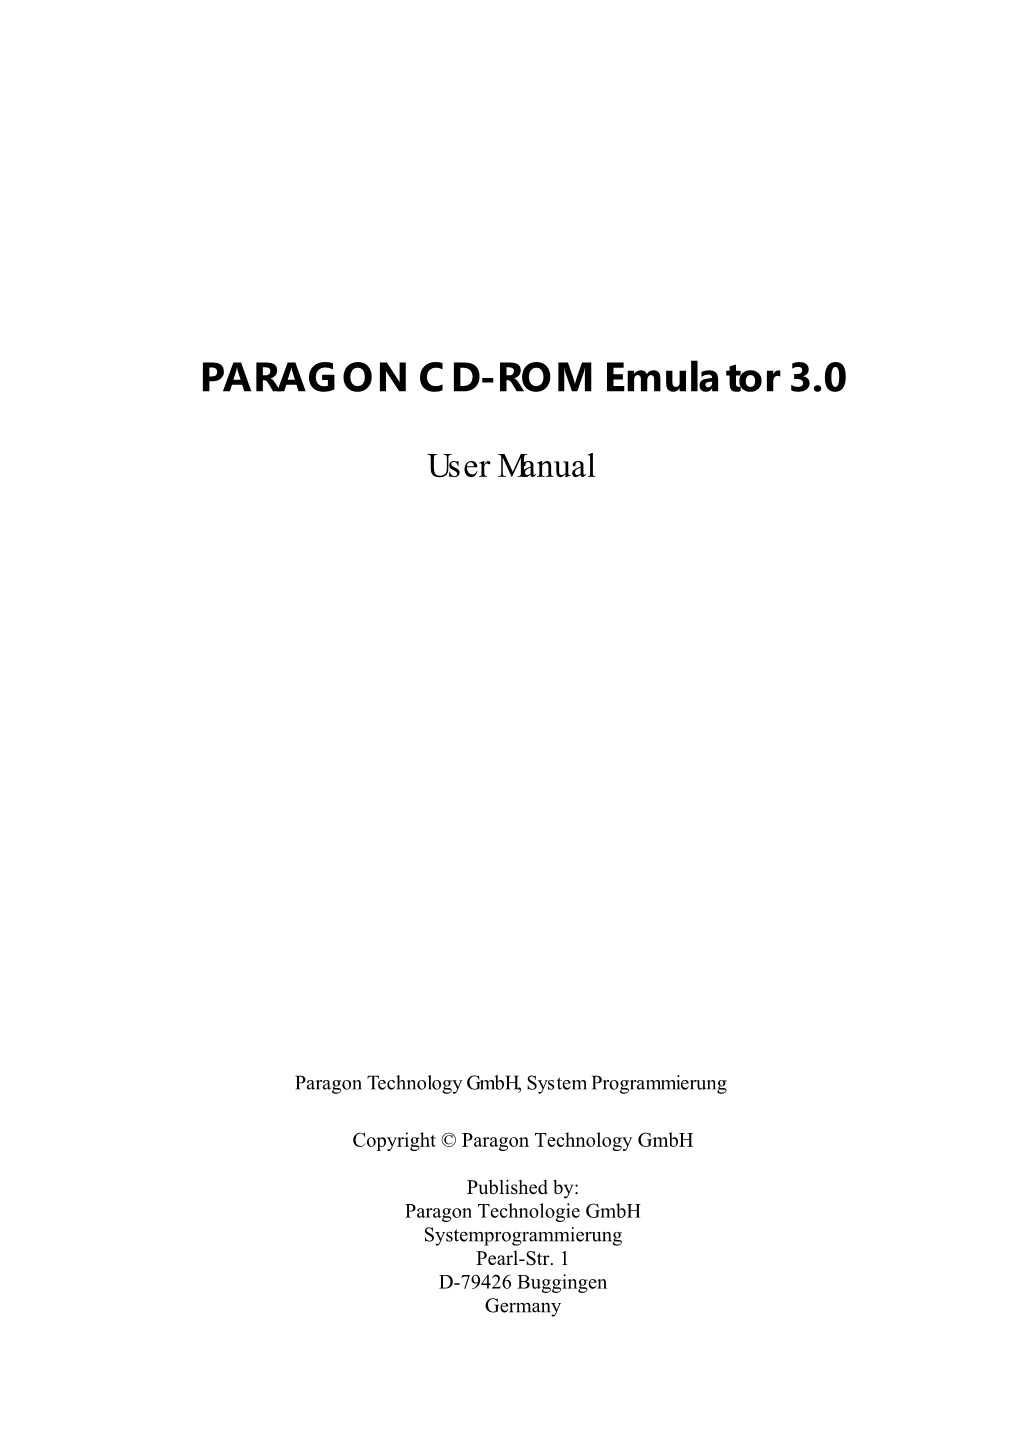 PARAGON CD-ROM Emulator 3.0